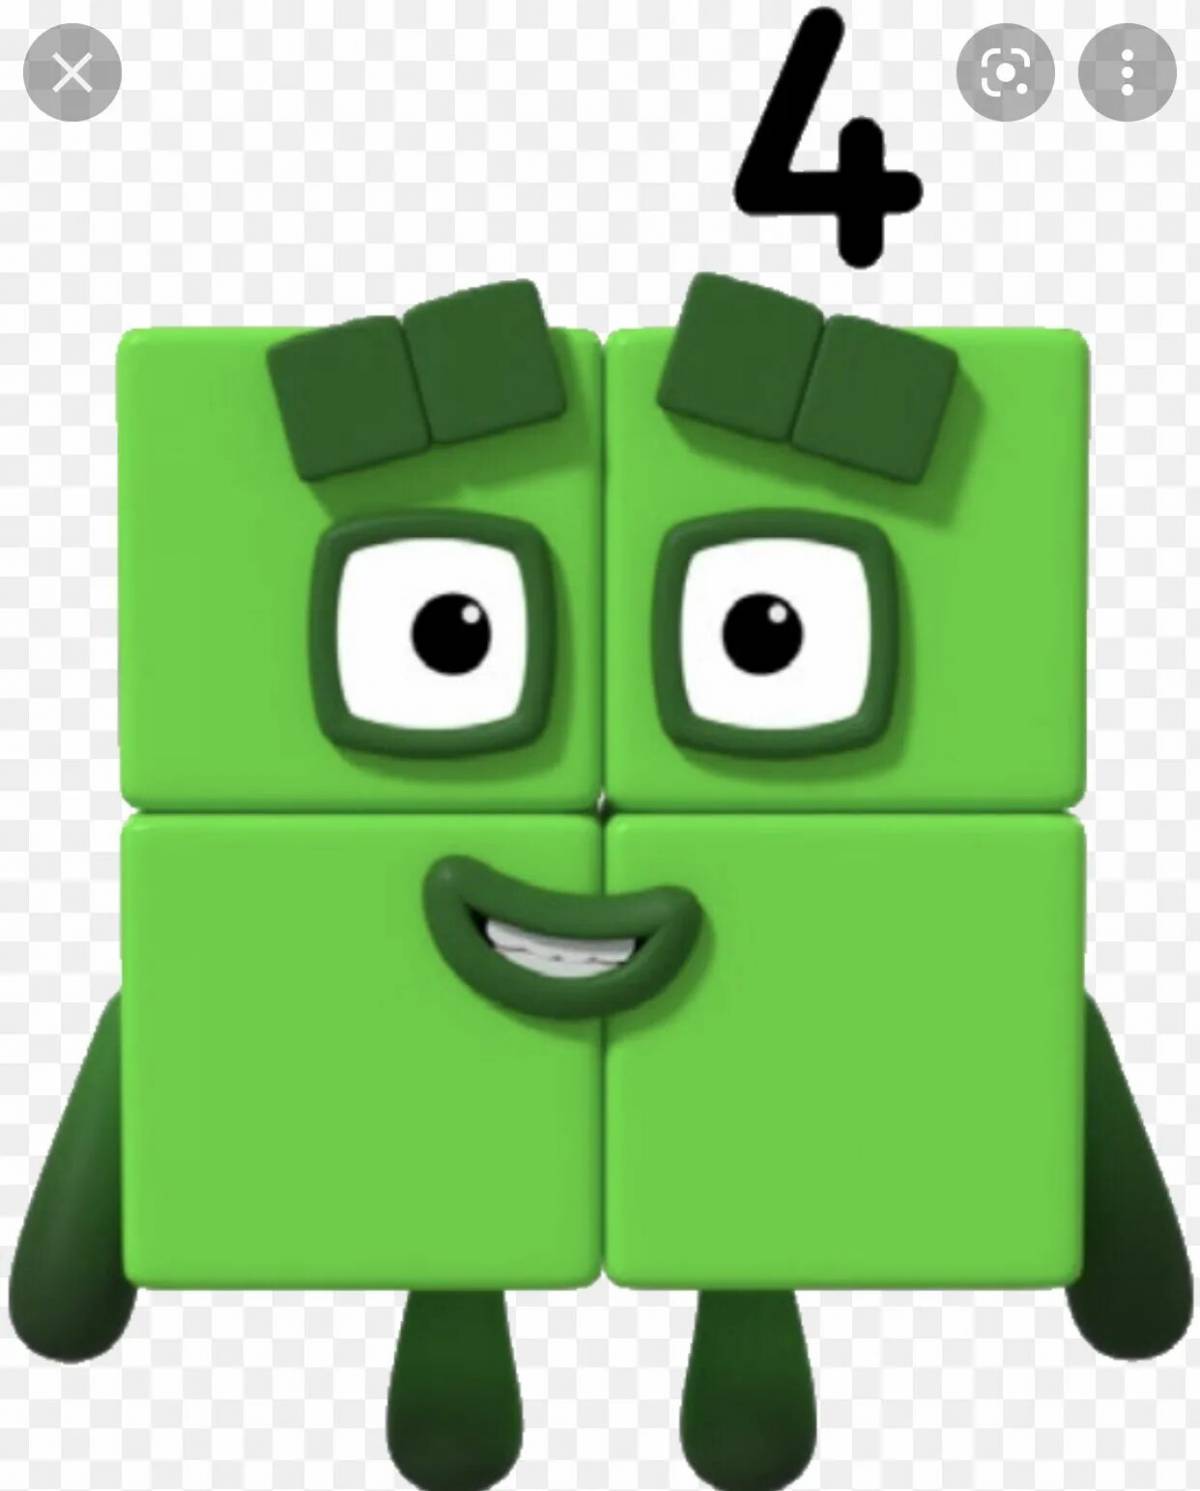 Number blocks #16